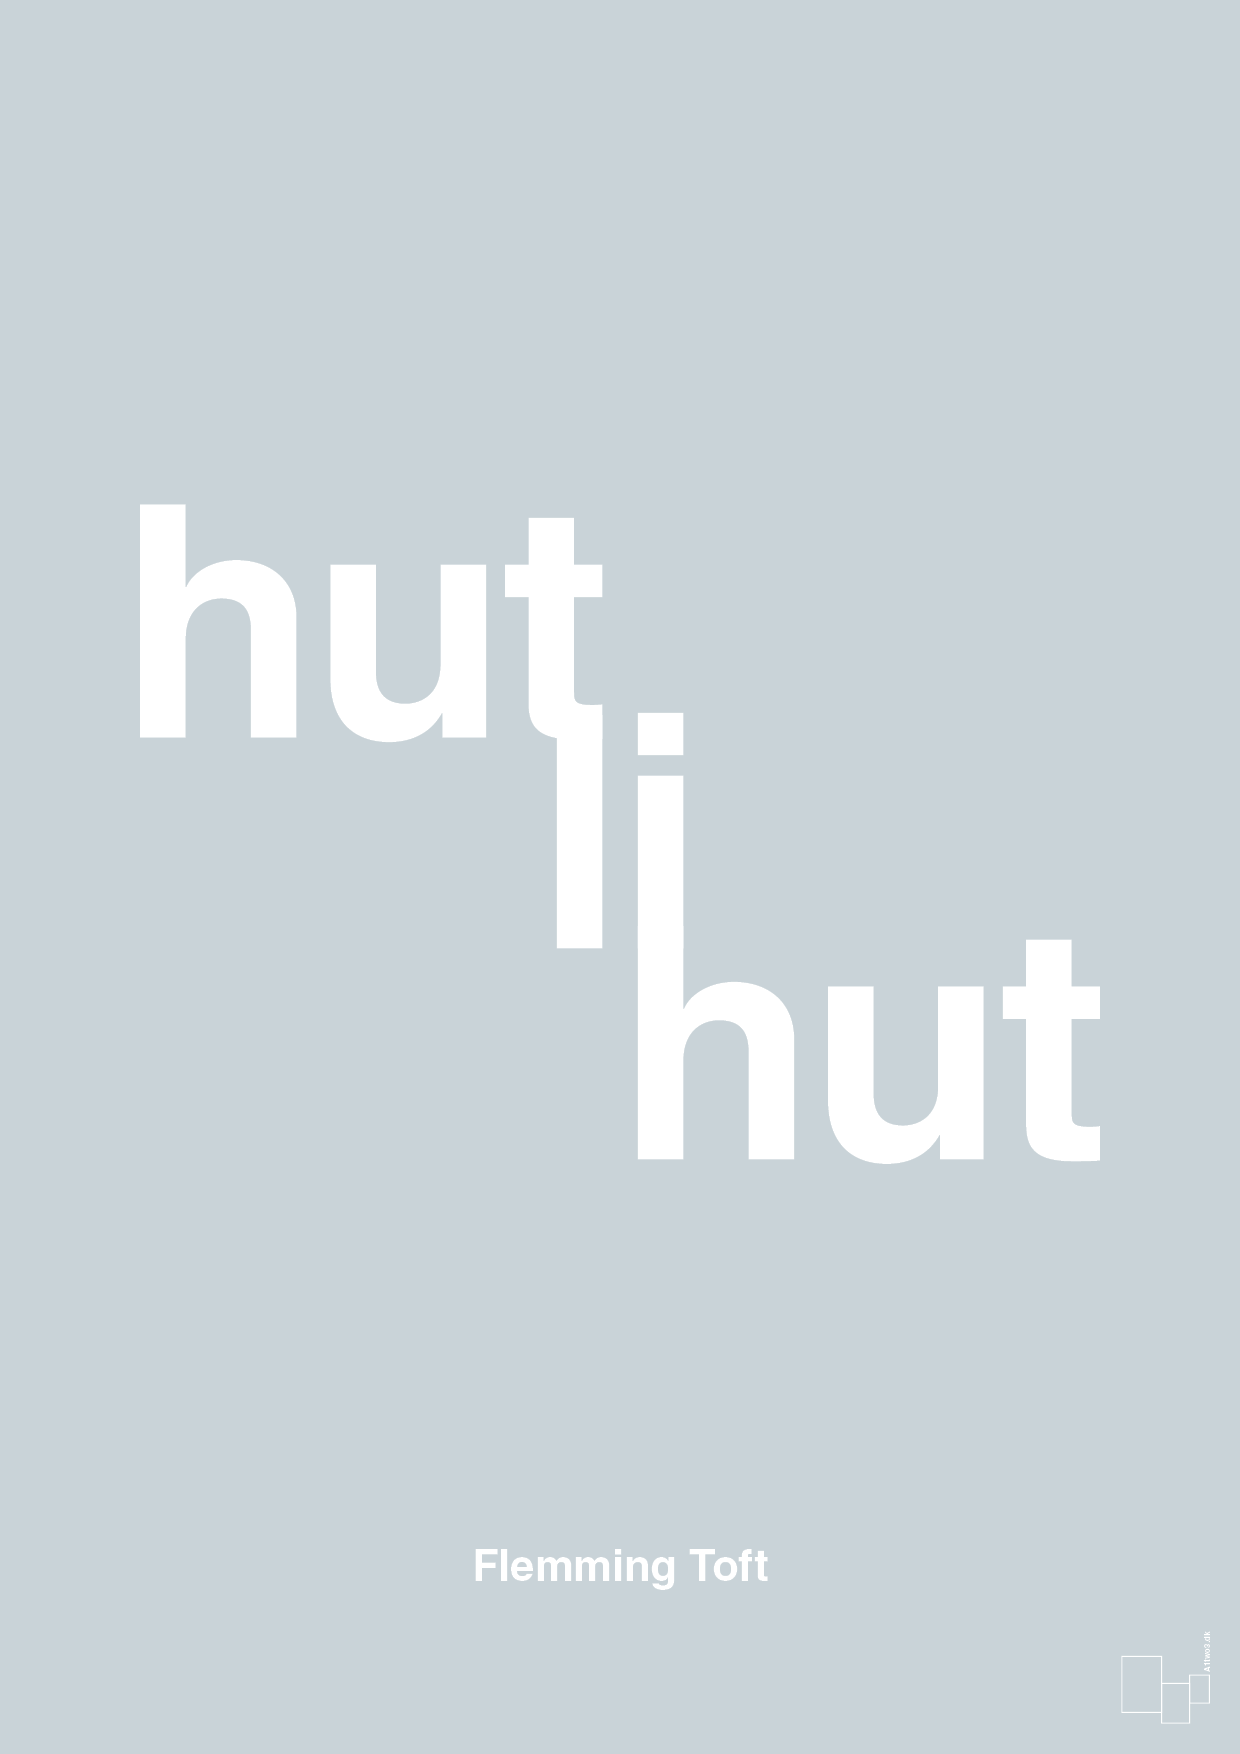 hutlihut - Plakat med Citater i Light Drizzle